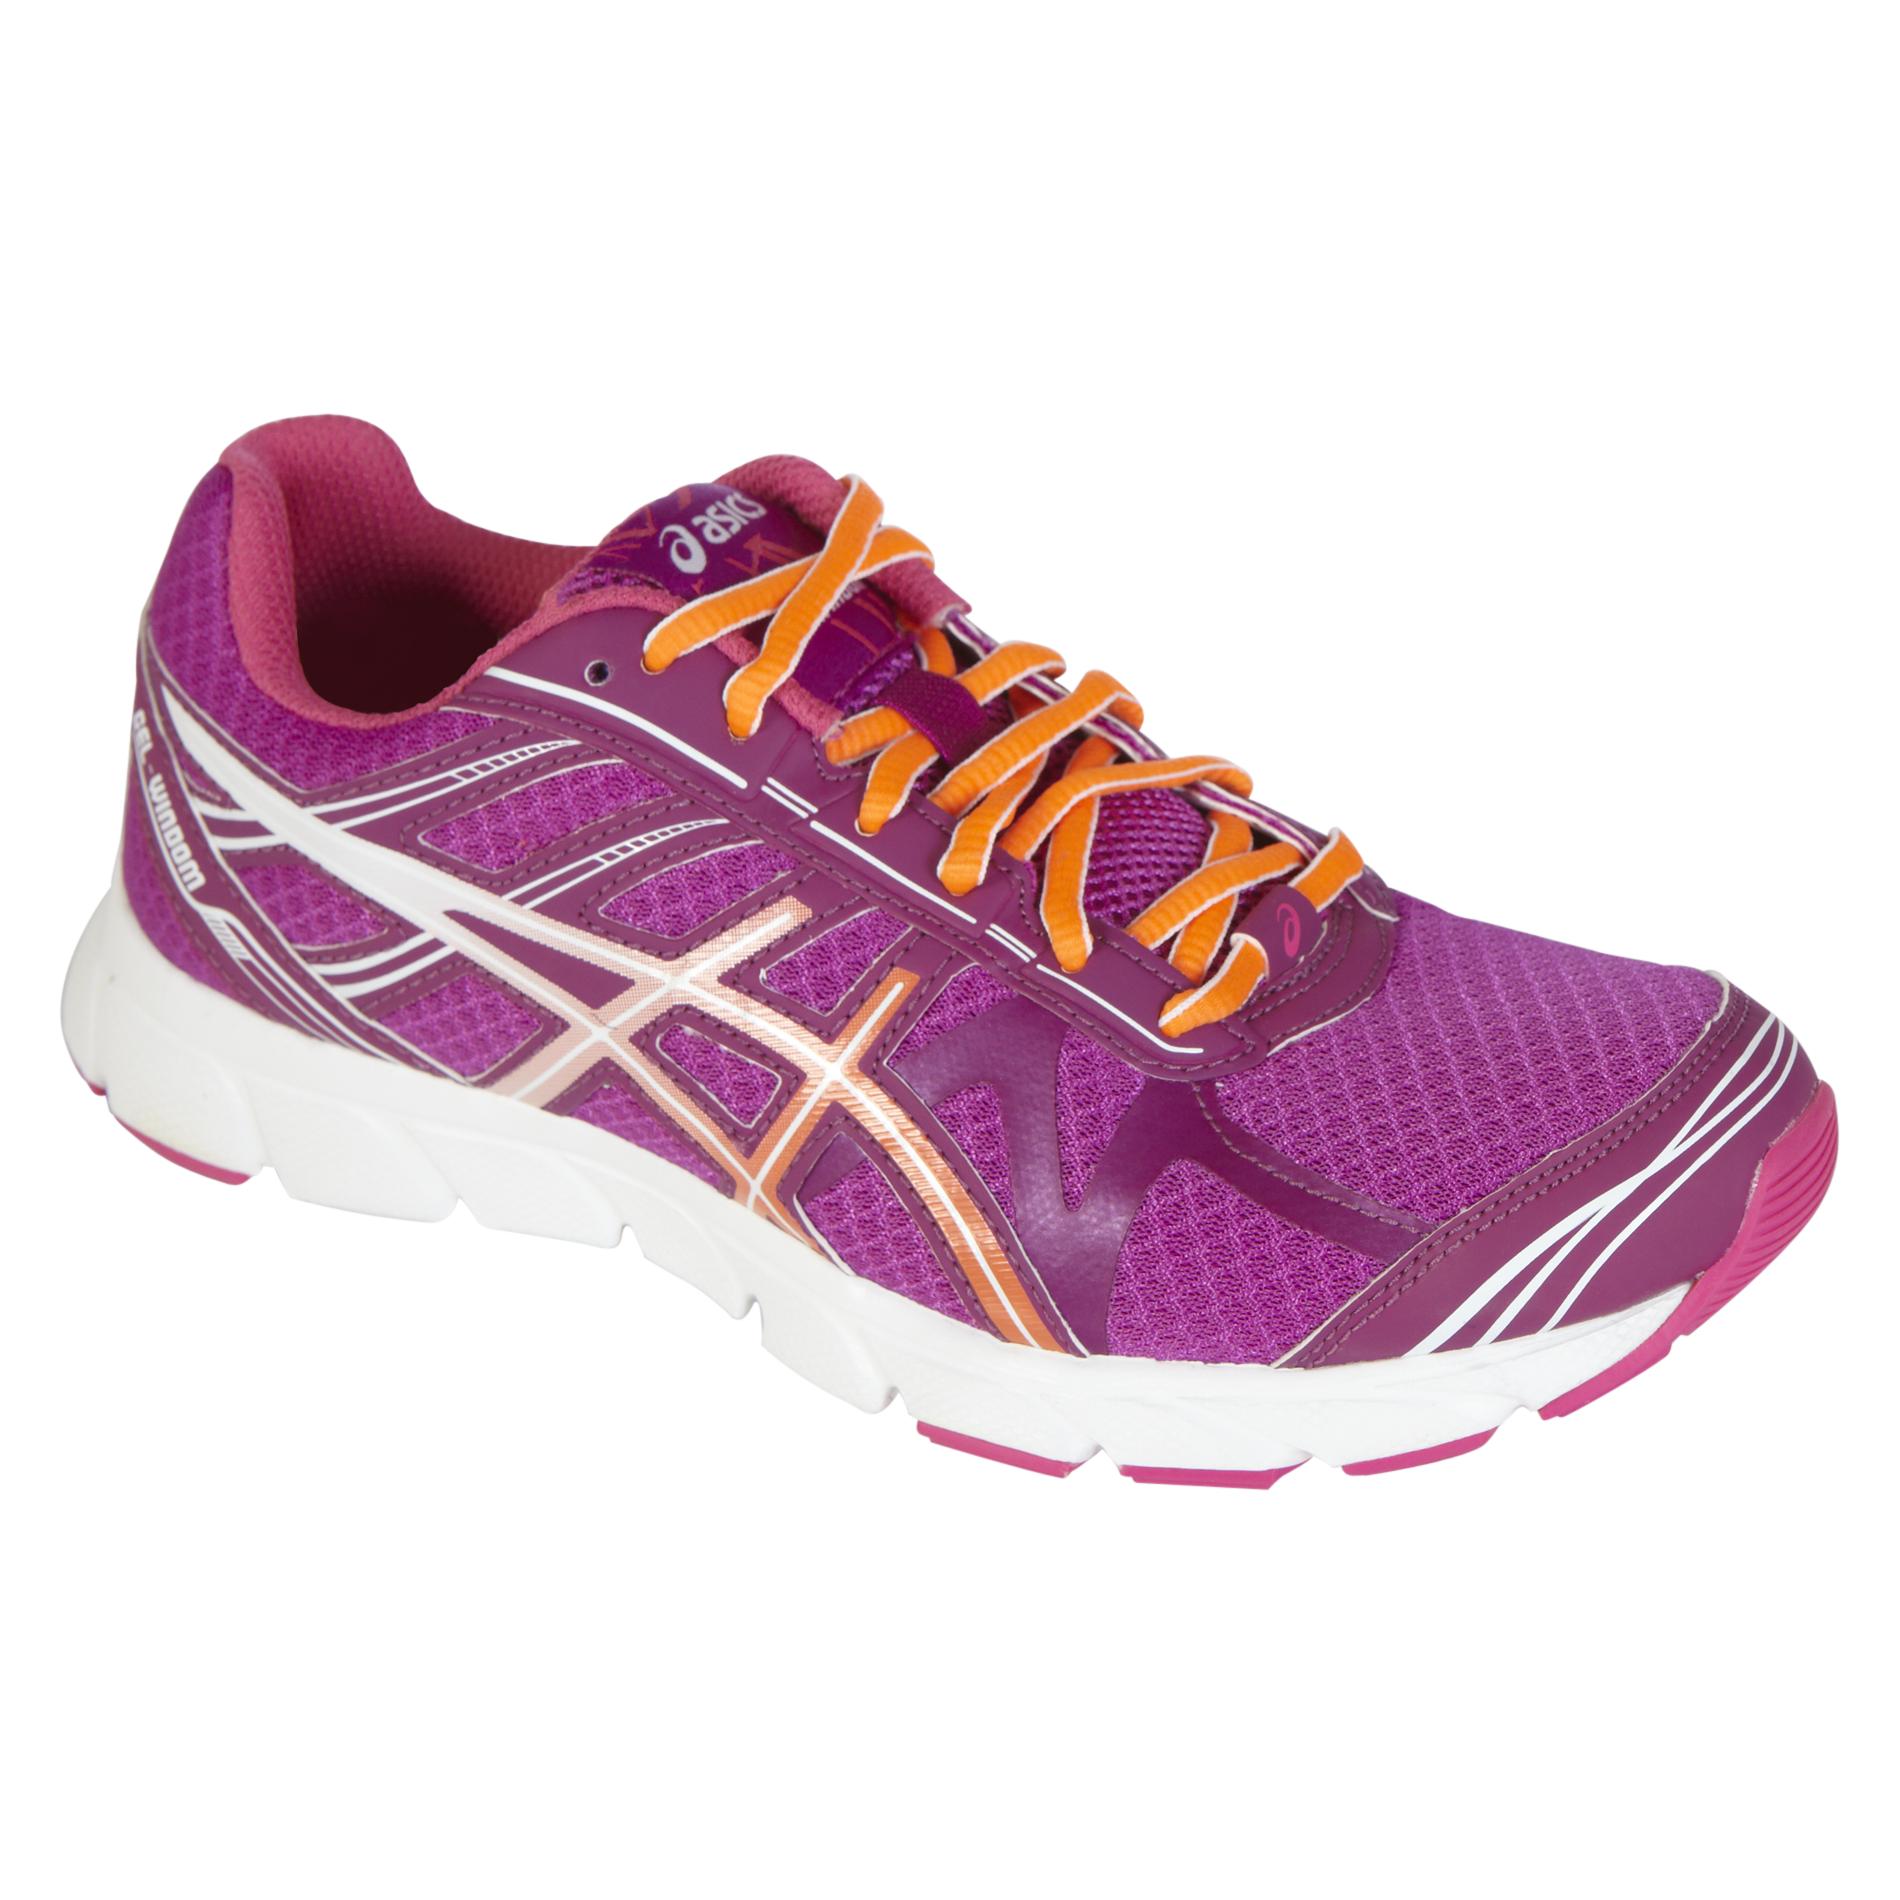 ASICS Women's GEL-Windom Running Athletic Shoe - Purple